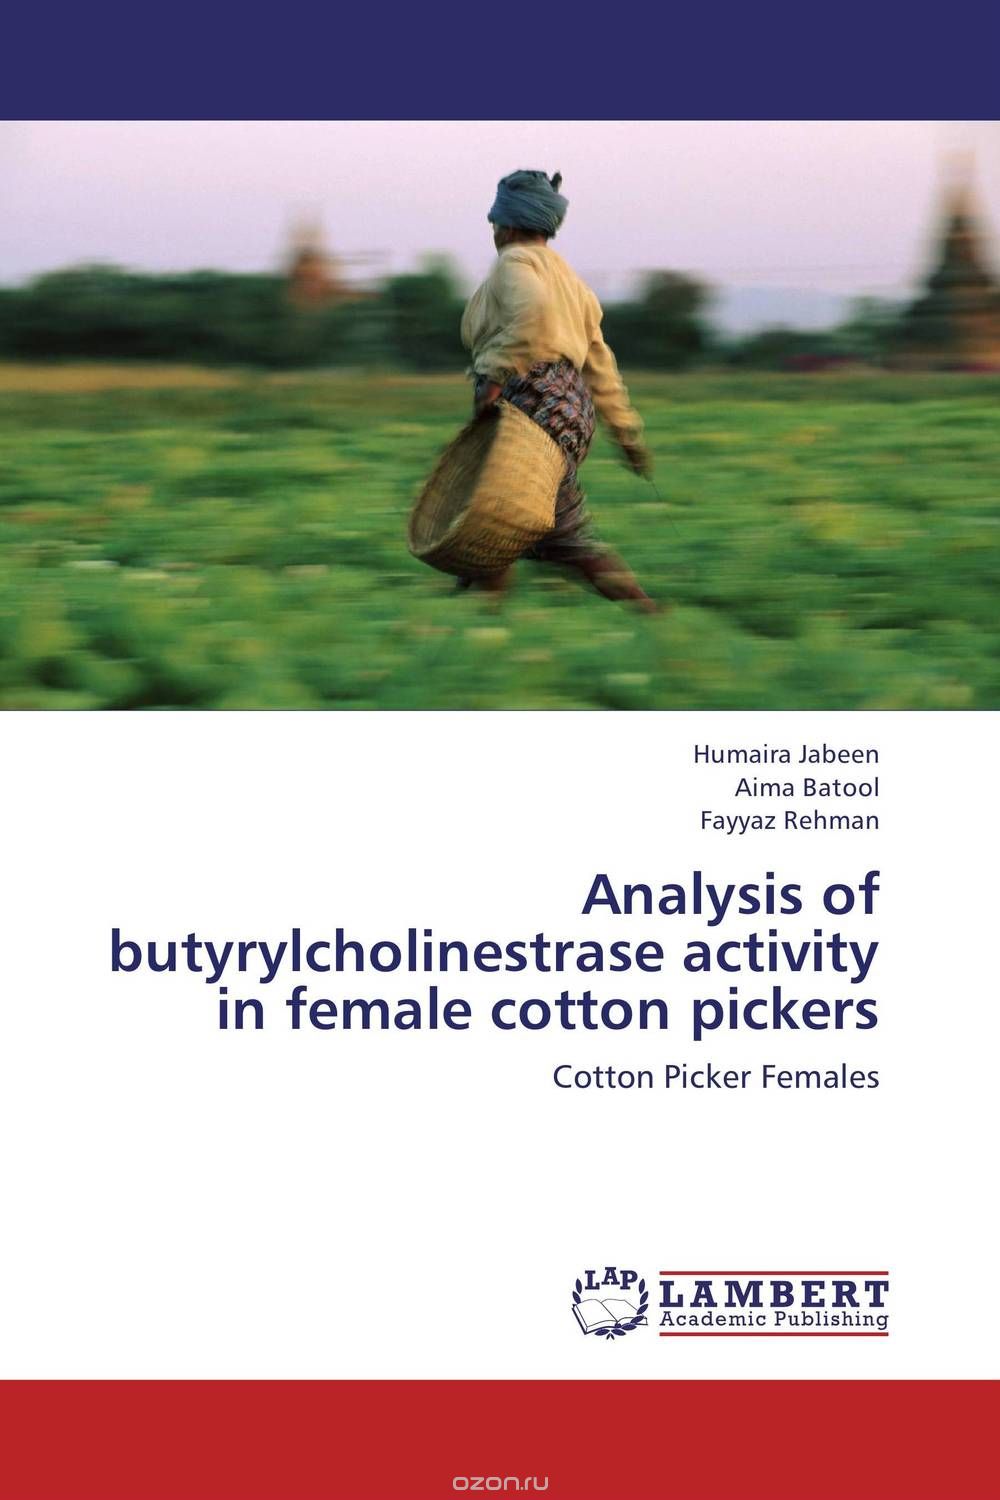 Скачать книгу "Analysis of butyrylcholinestrase activity in female cotton pickers"